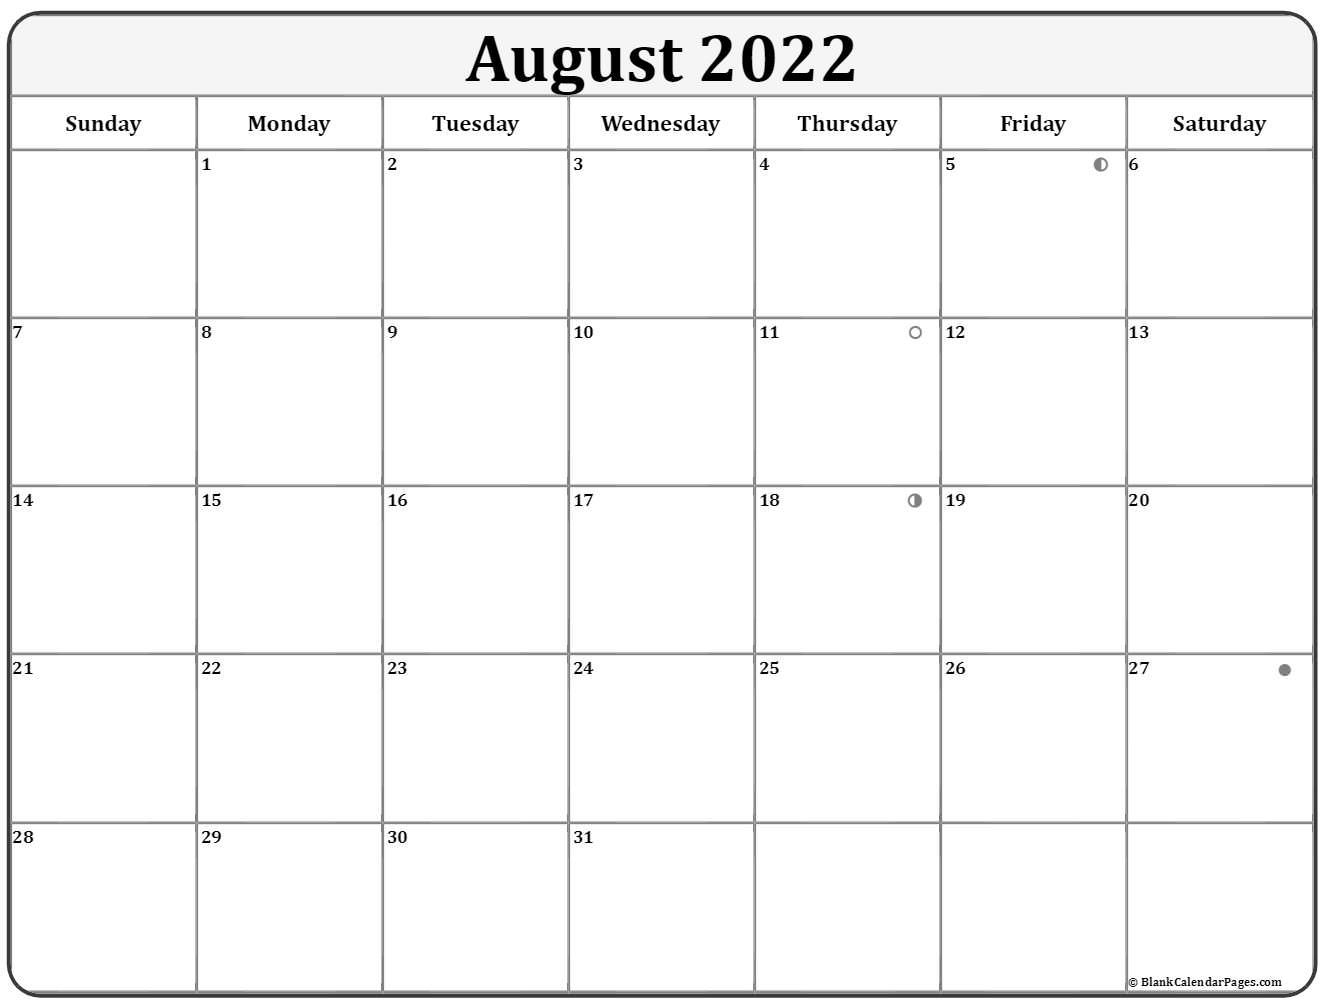 August 2022 Lunar Calendar | Moon Phase Calendar